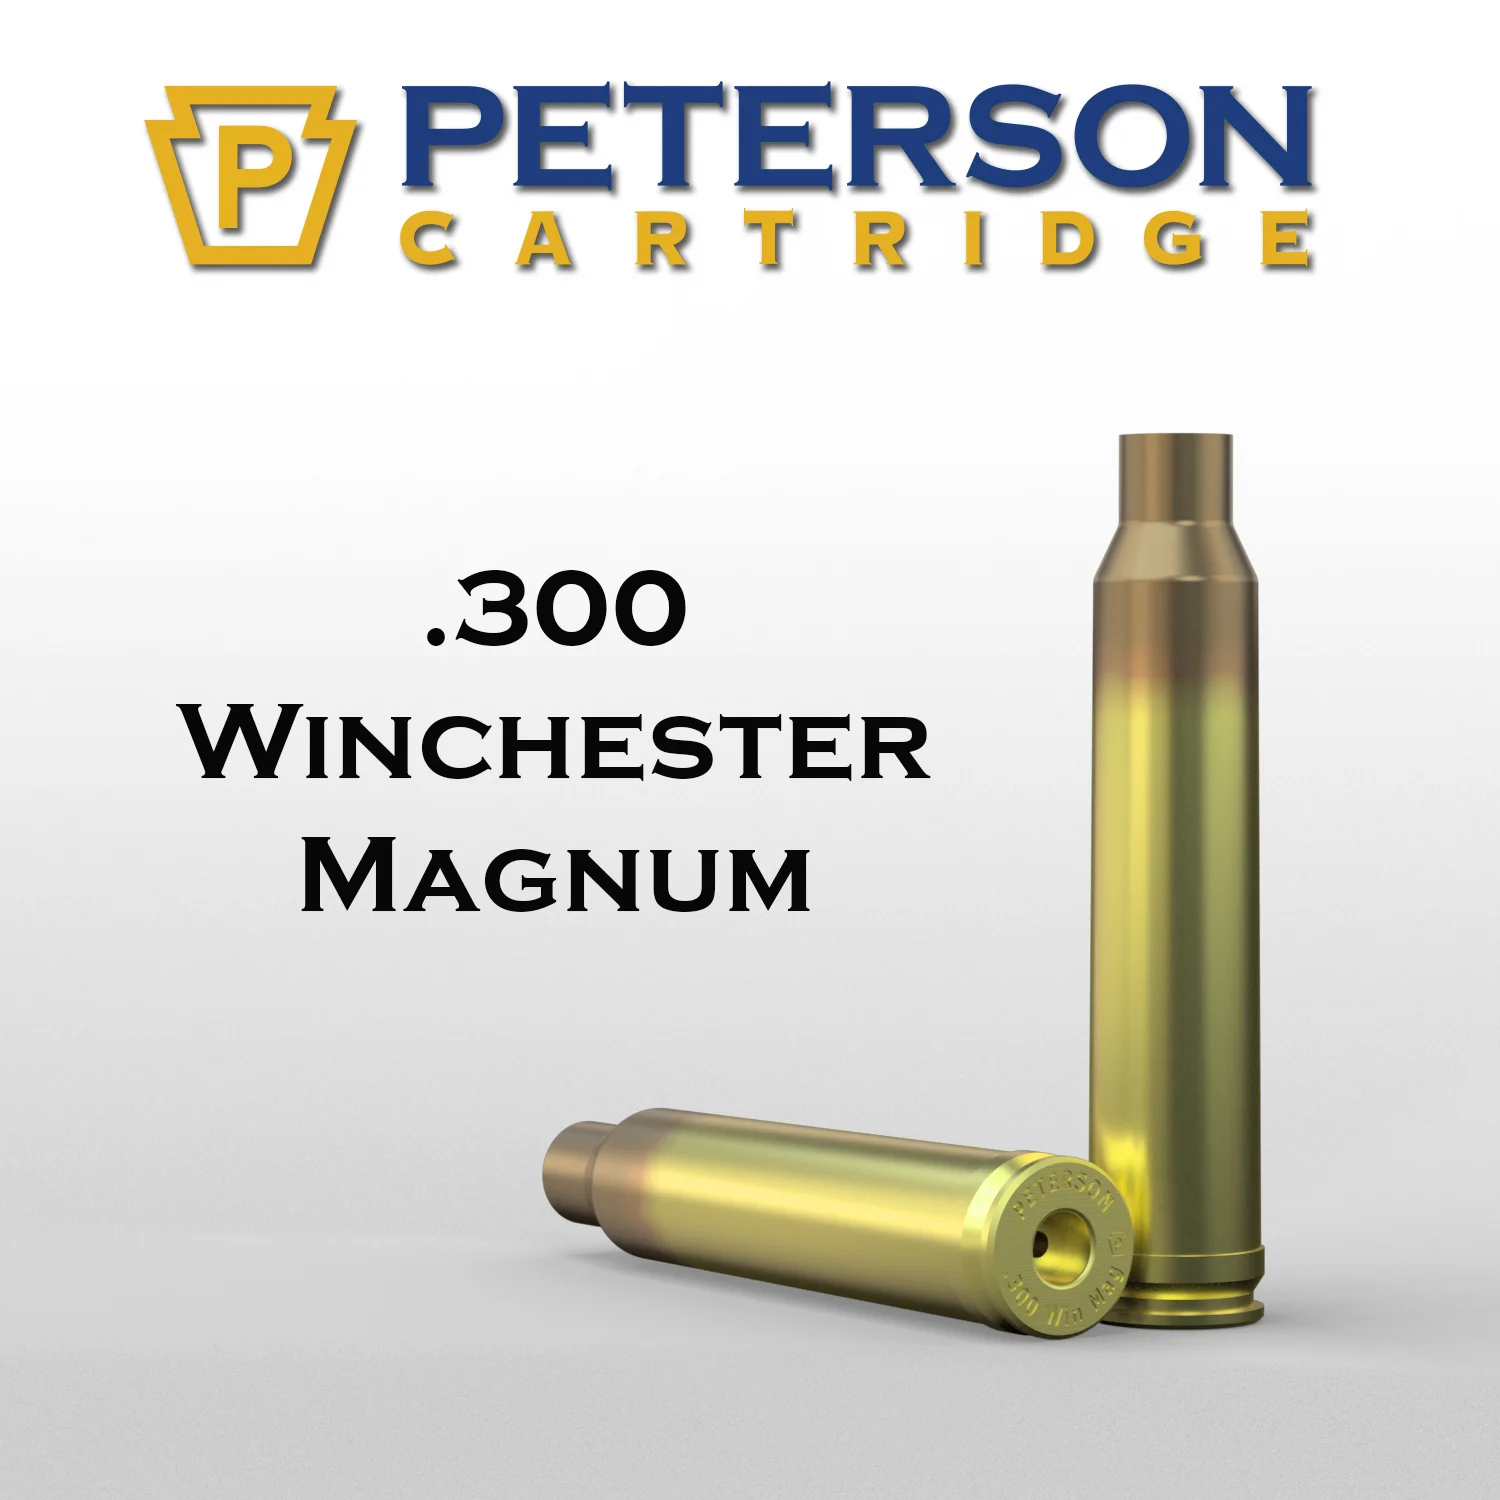 Peterson Cartridge 300 Winchester Magnum Unprimed Brass 50ct